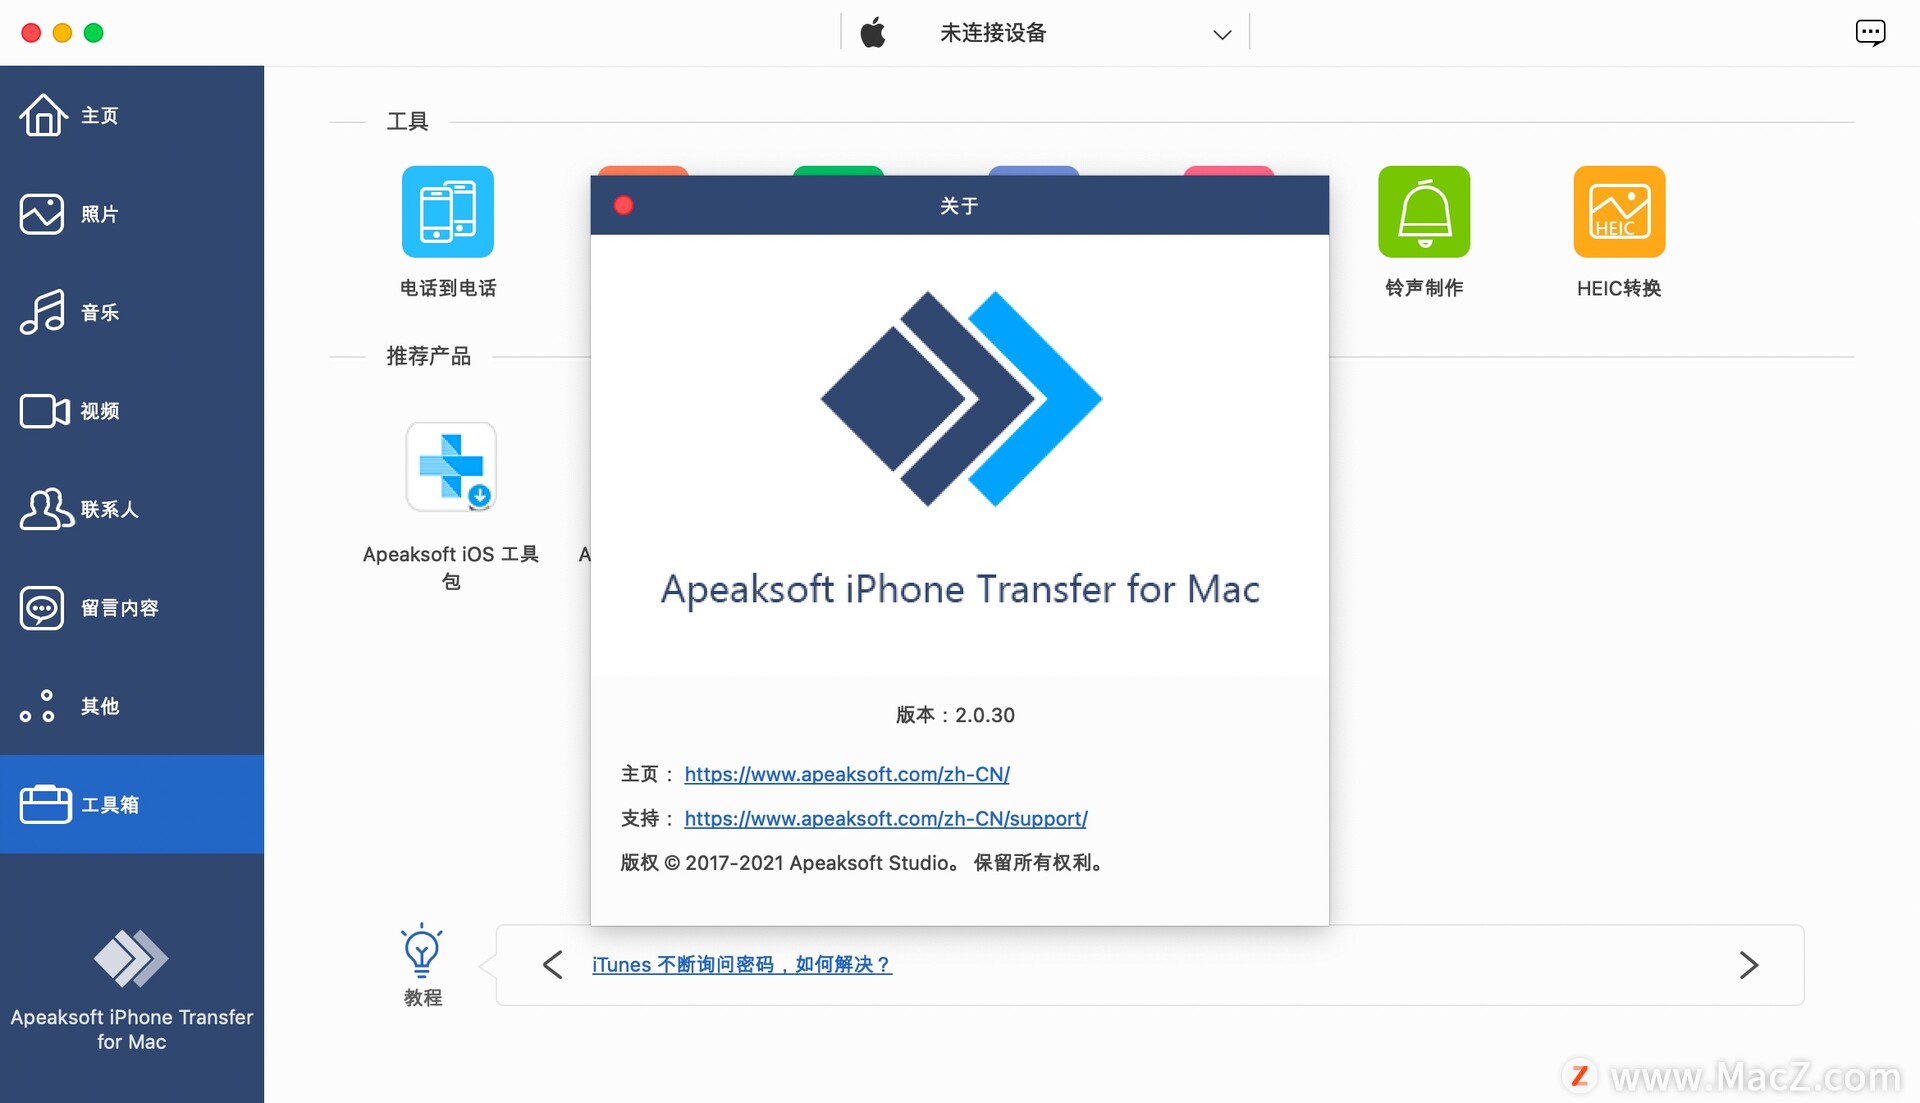 Apeaksoft iPhone Transfer for Mac(iPhone数据传输软件) - 哔哩哔哩